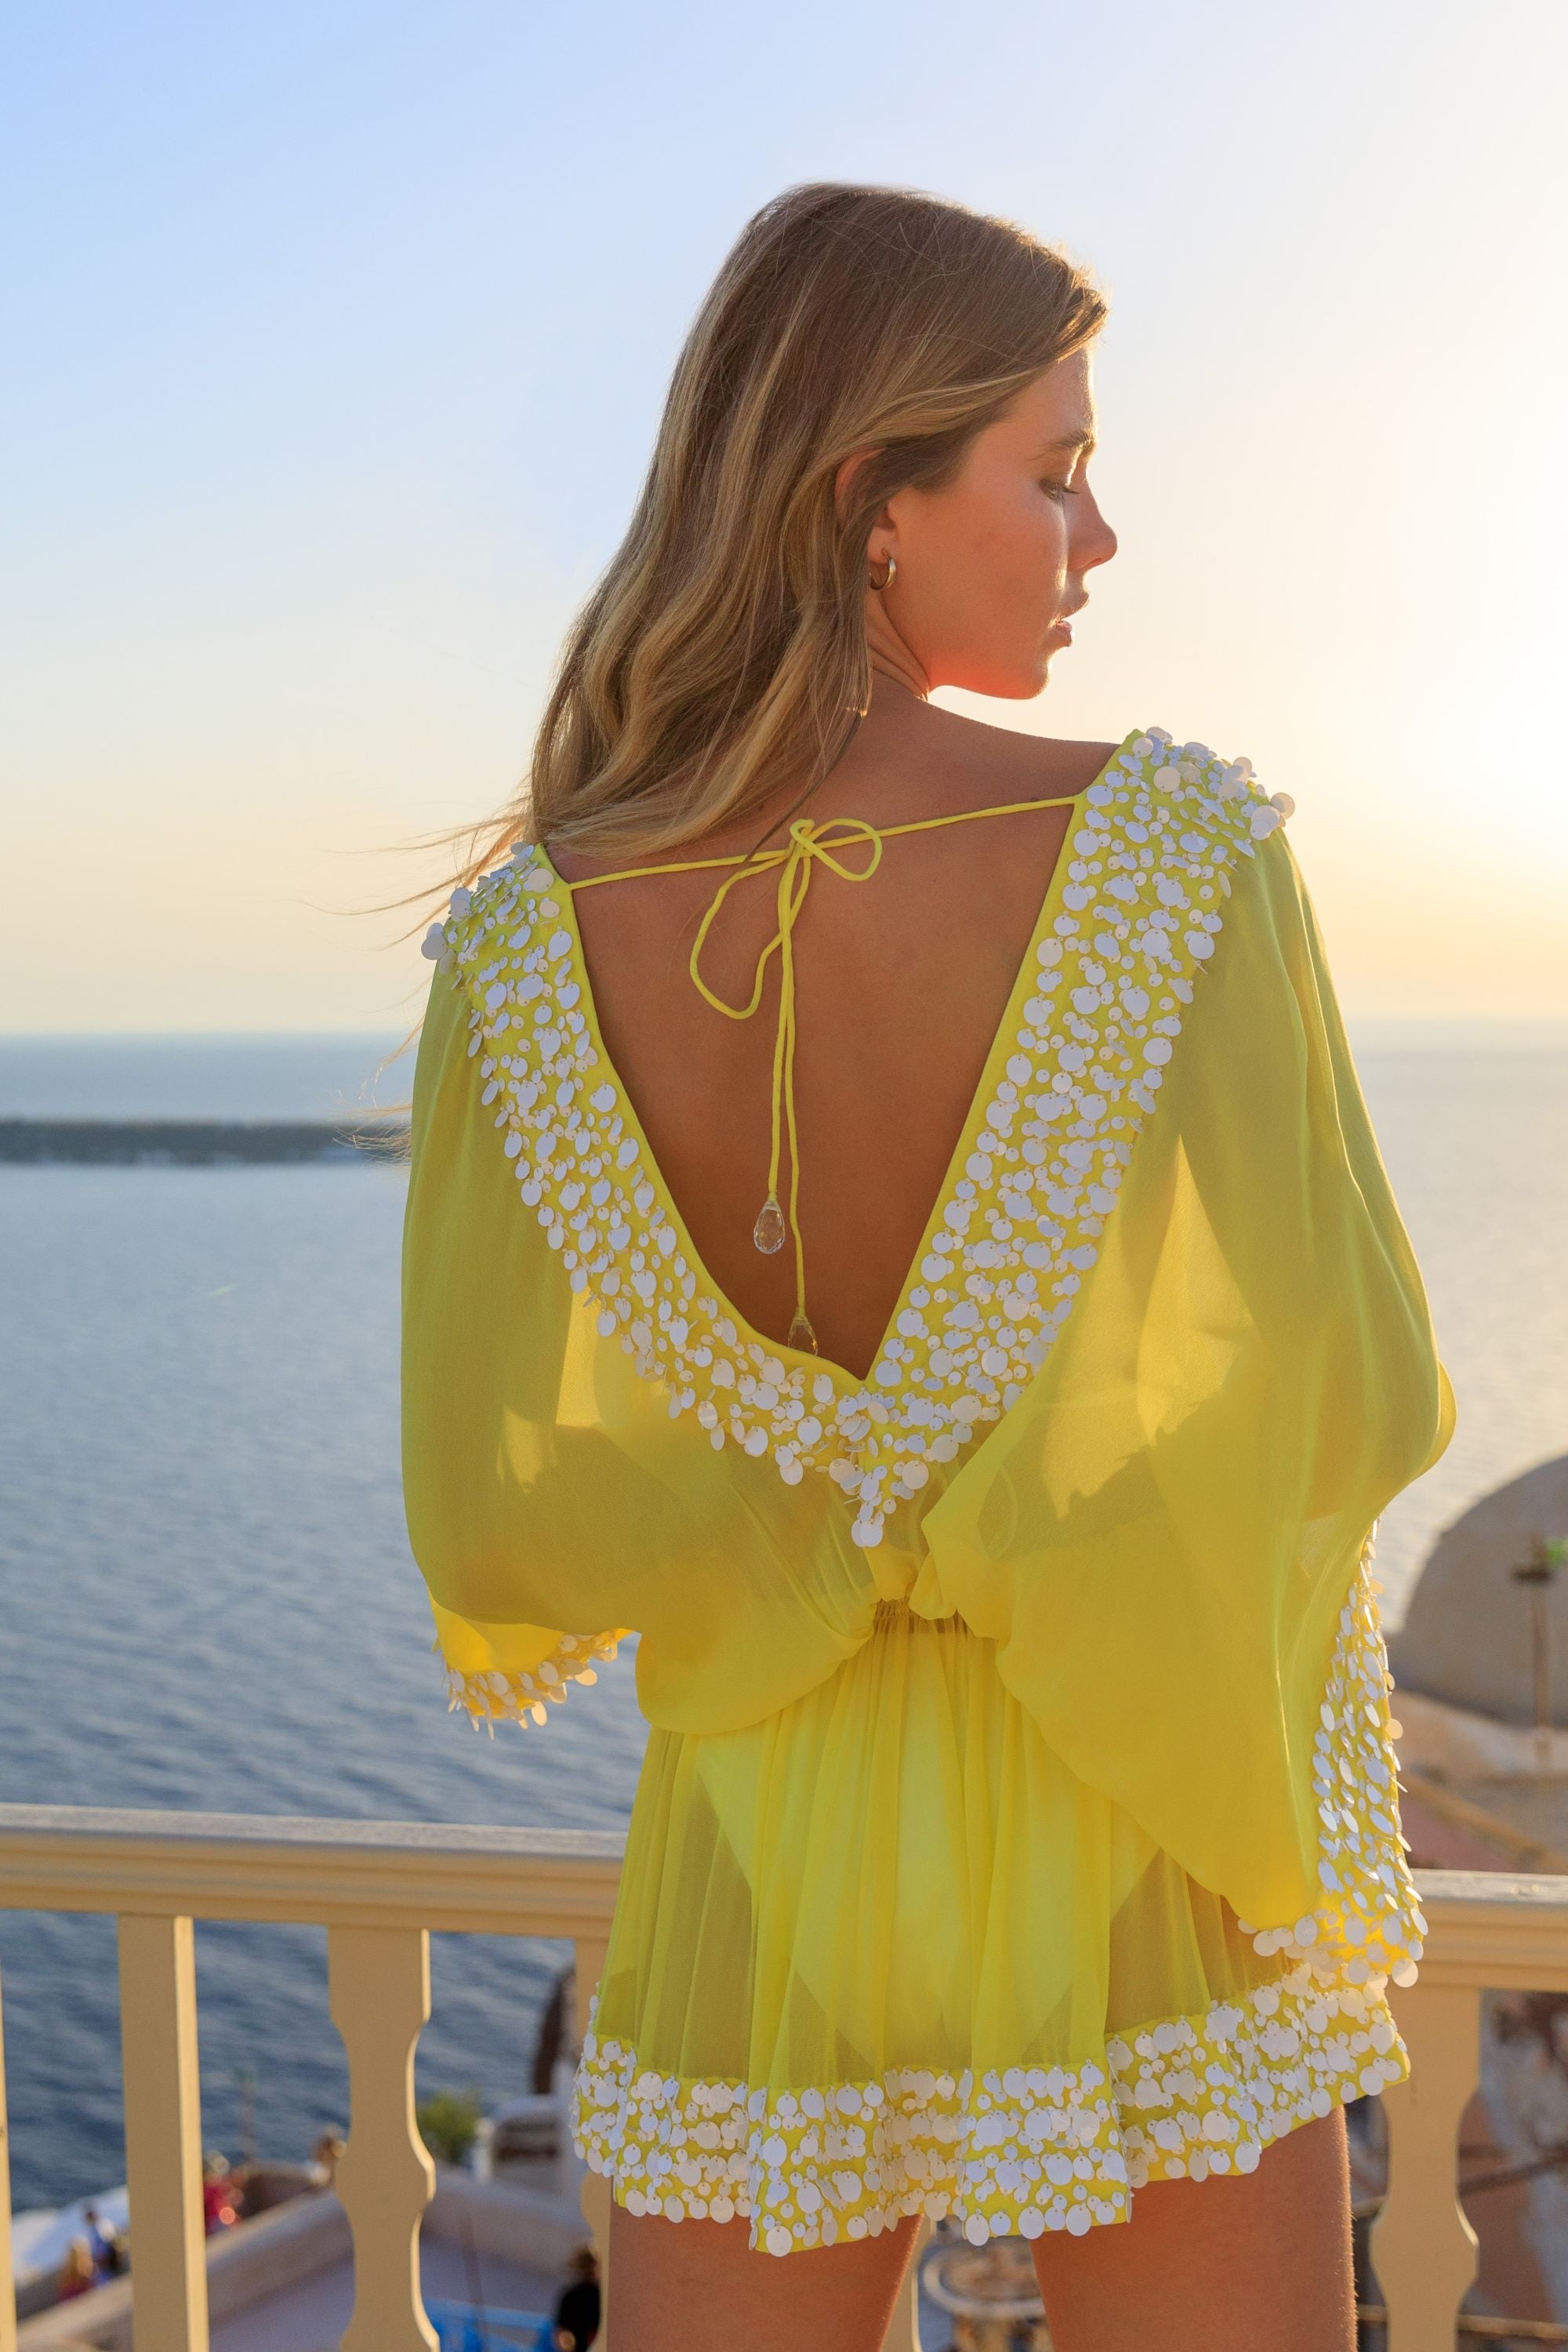 Bright yellow silk luxury designer kaftans and luxury resort wear by Lindsey Brown